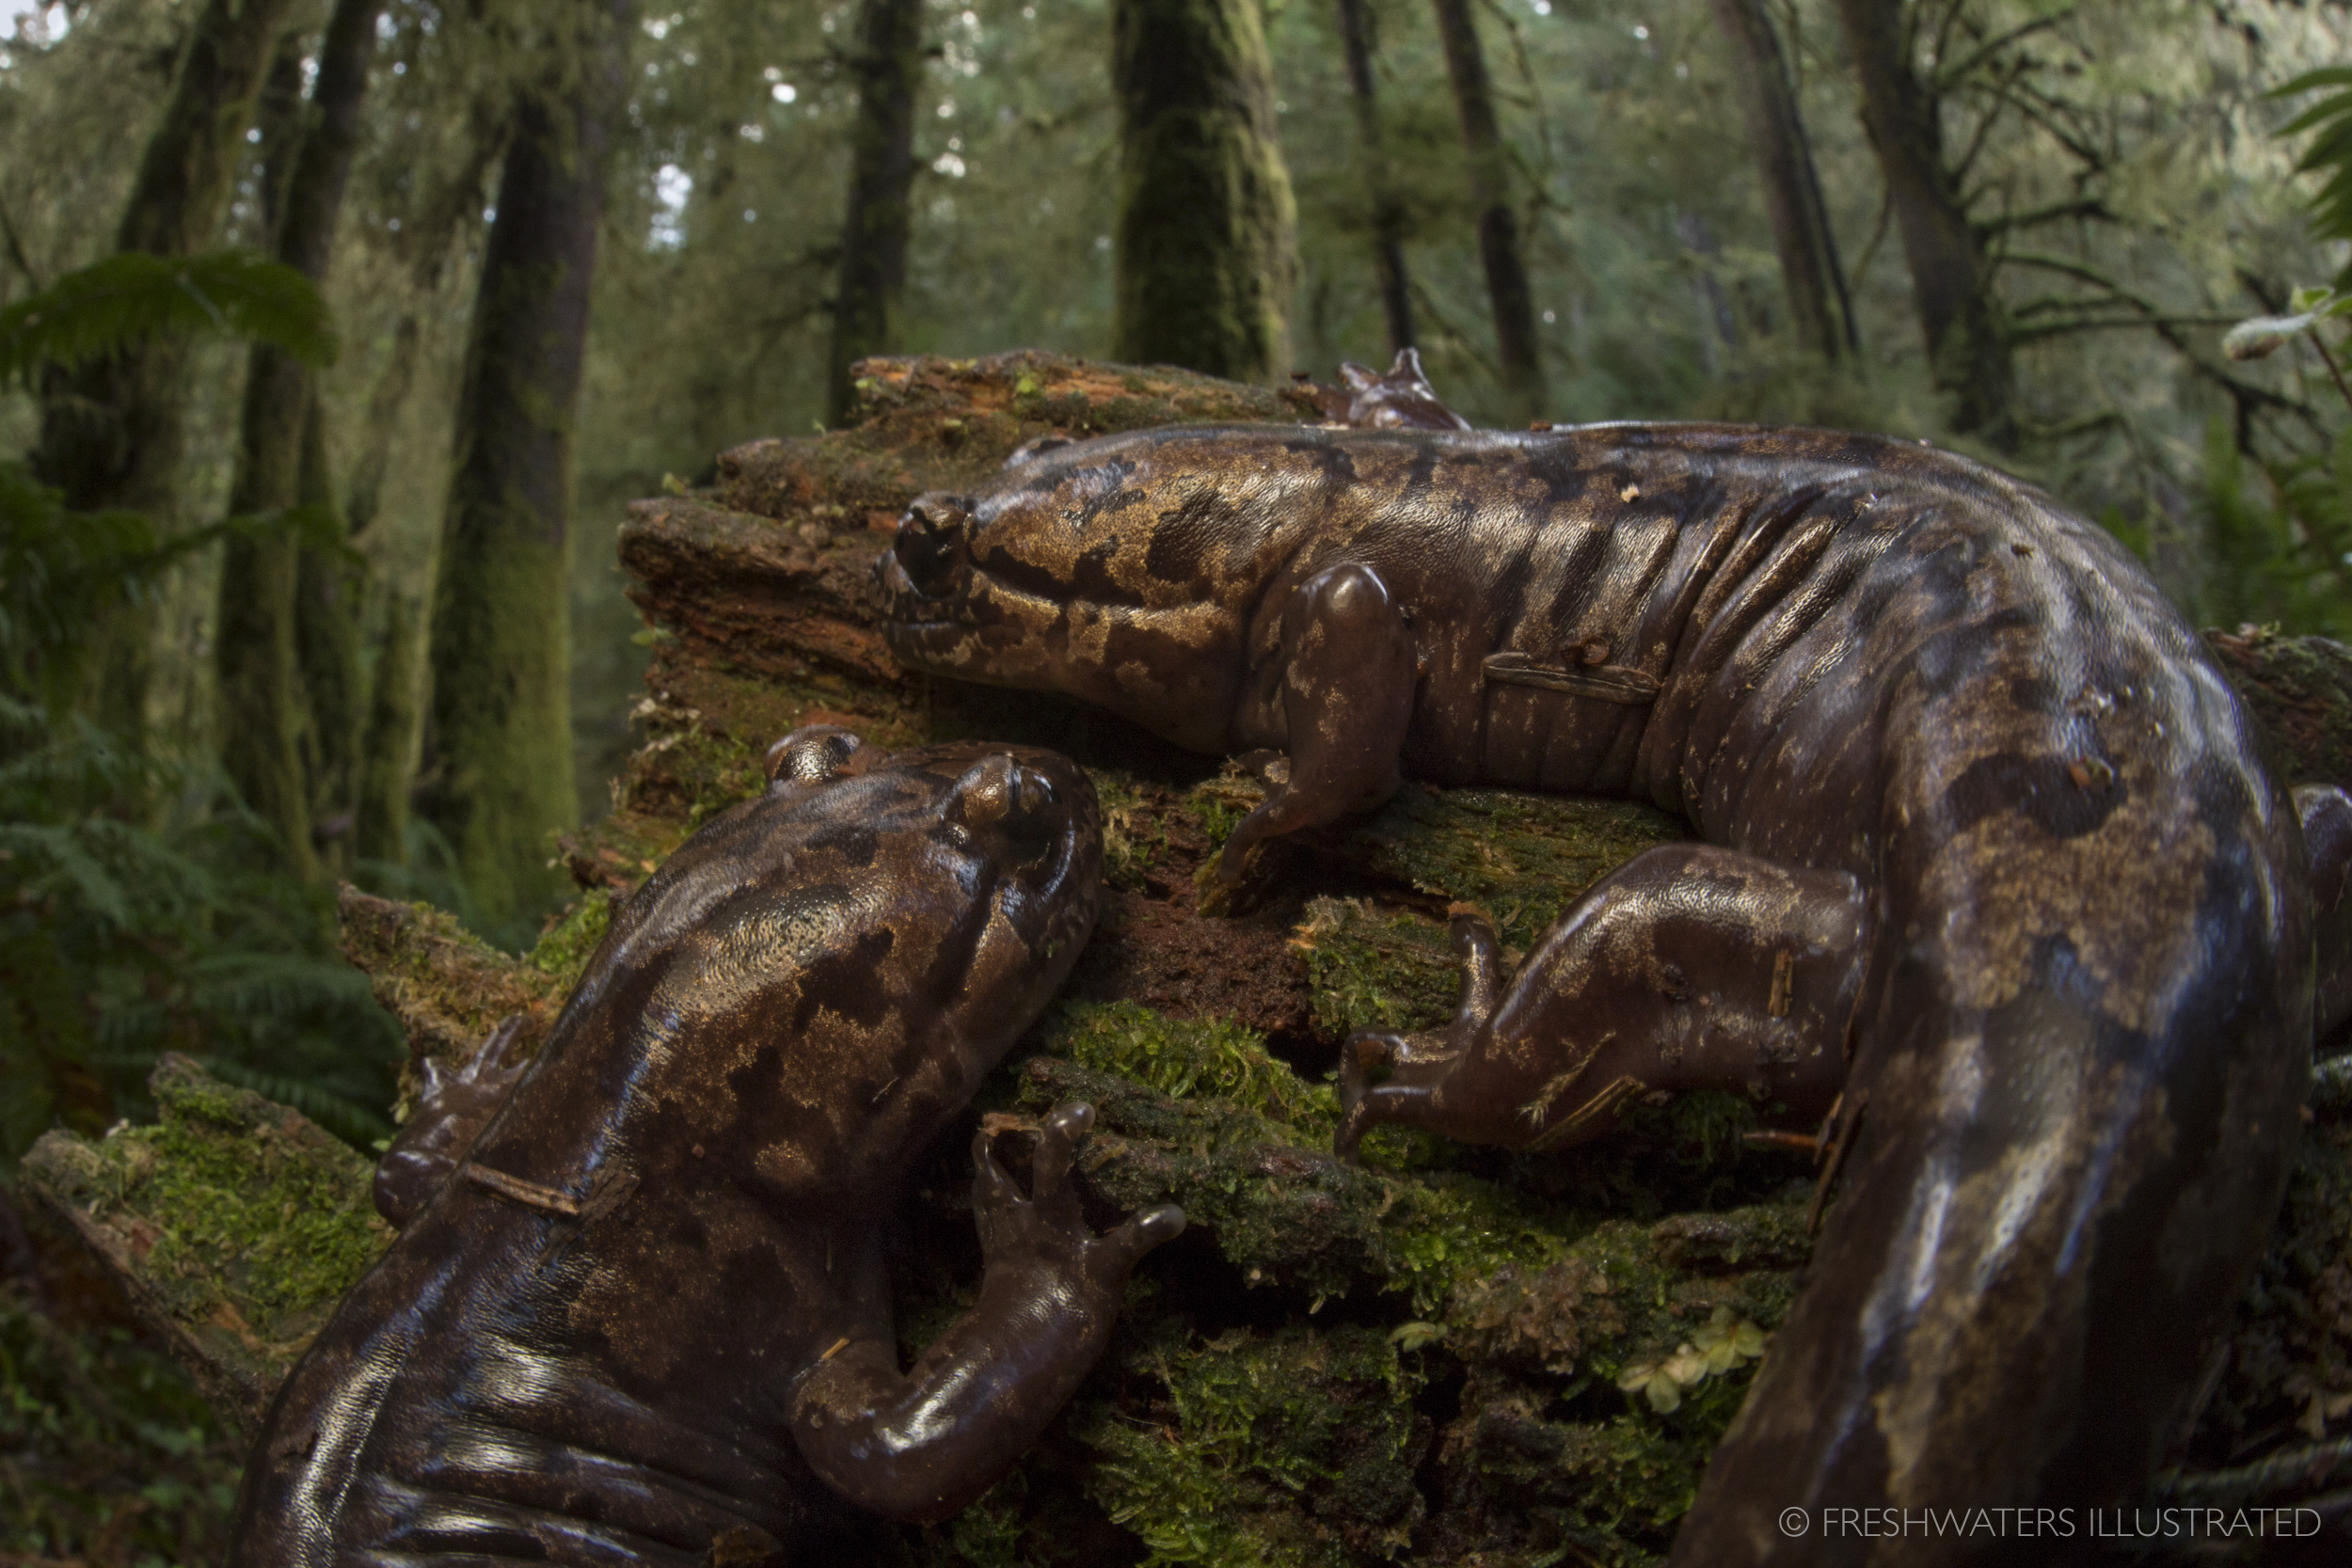  Terrestrial pacific giant salamanders (Dicamptodon tenebrosus) in an old growth forest. Cummins Creek, Oregon  www.FreshwatersIllustrated.org  